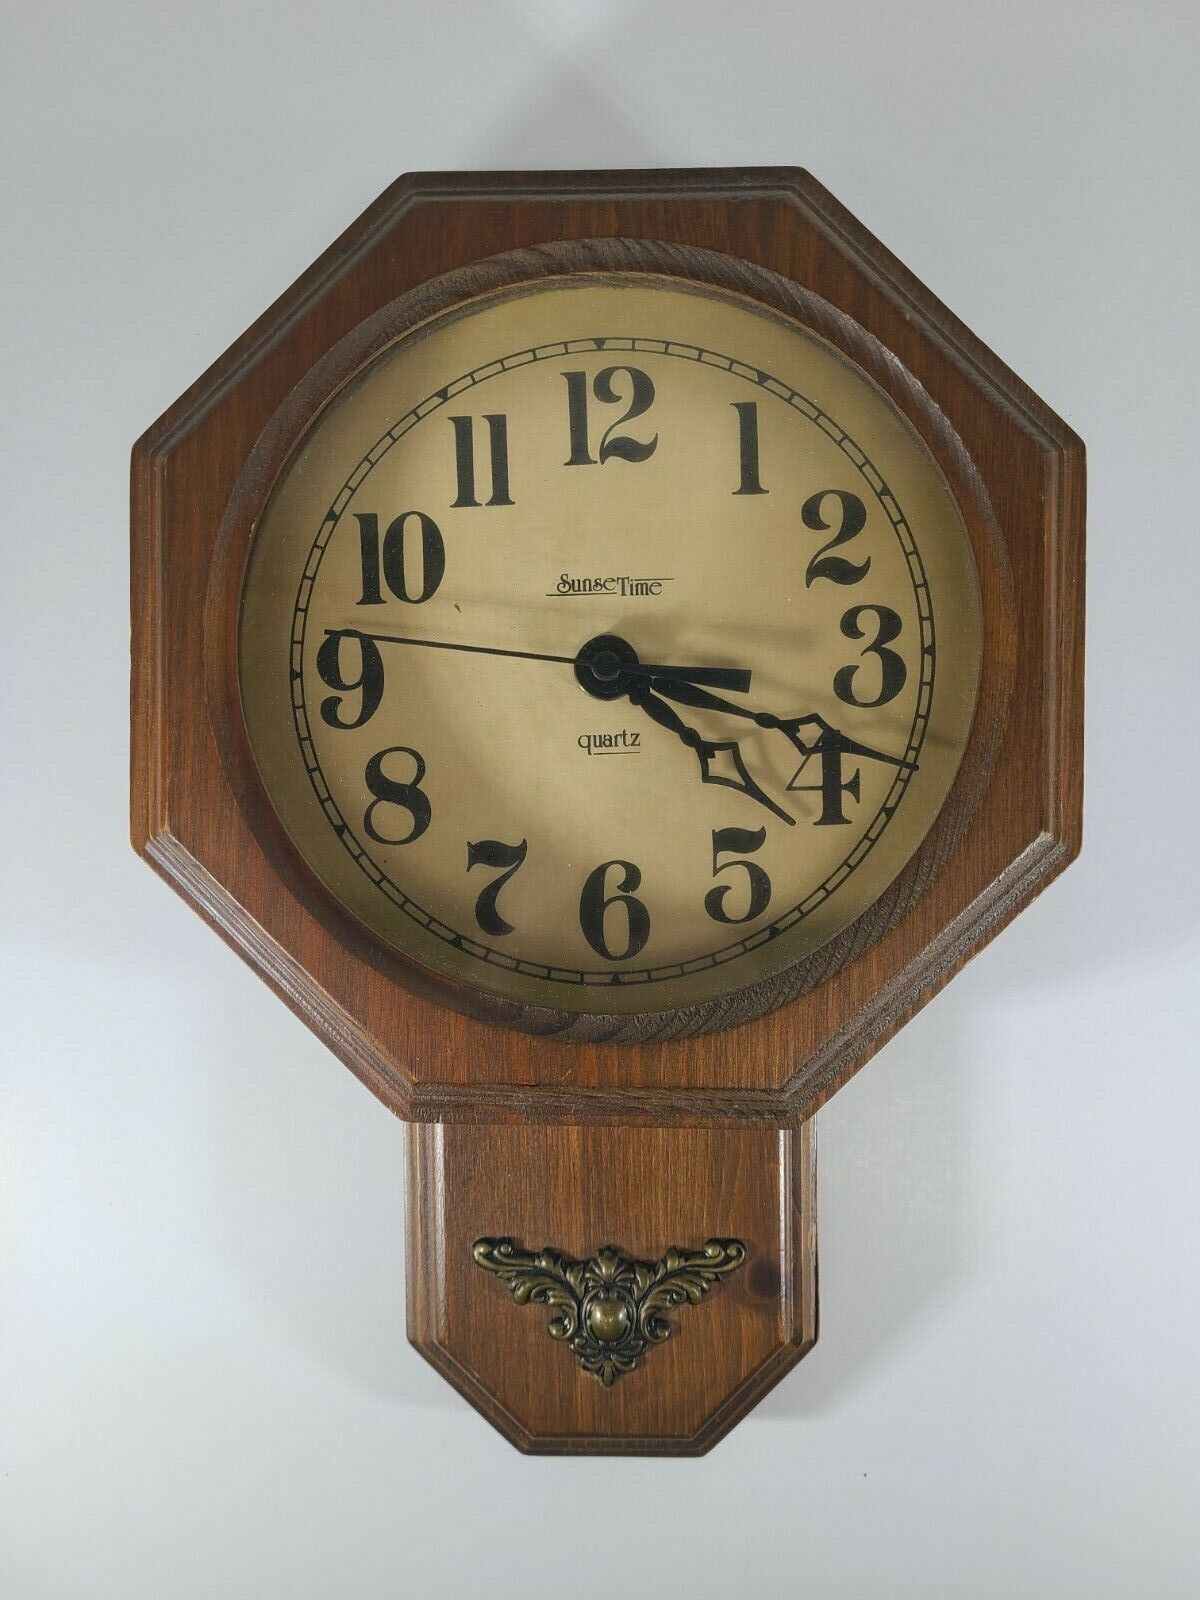 Vintage Sunset Time Quartz Wall Clock - Works! - Model #103B384